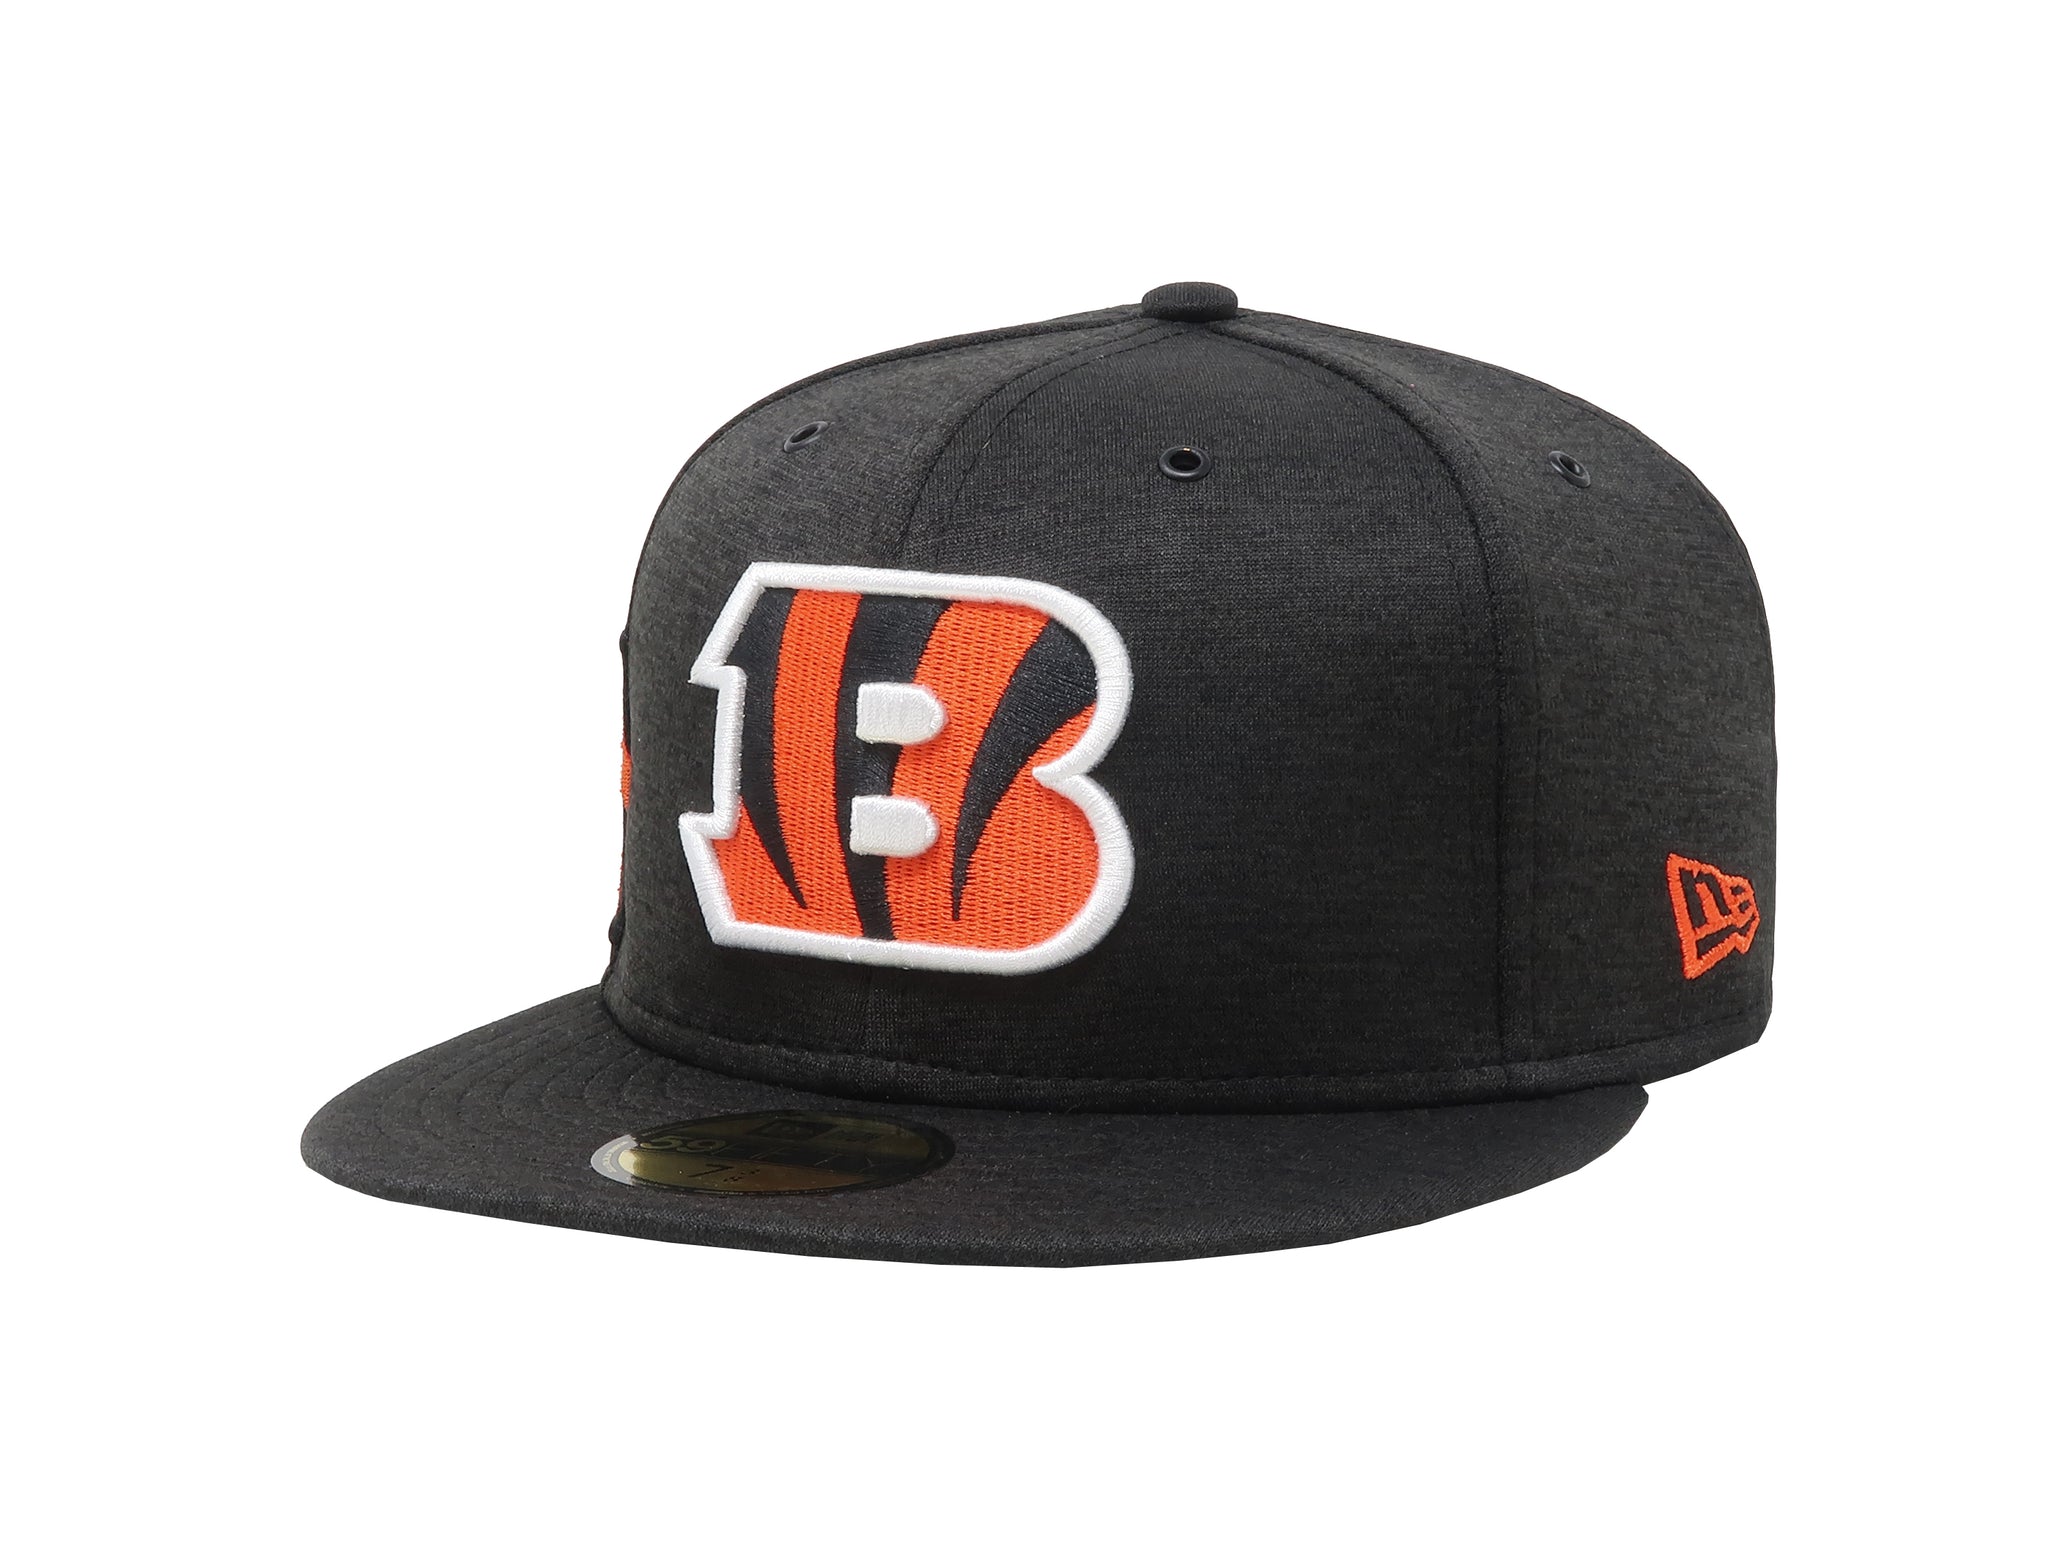 5950 59FIFTY new era nfl men fitted cincinnati bengals black orange cap hat national football league front side left